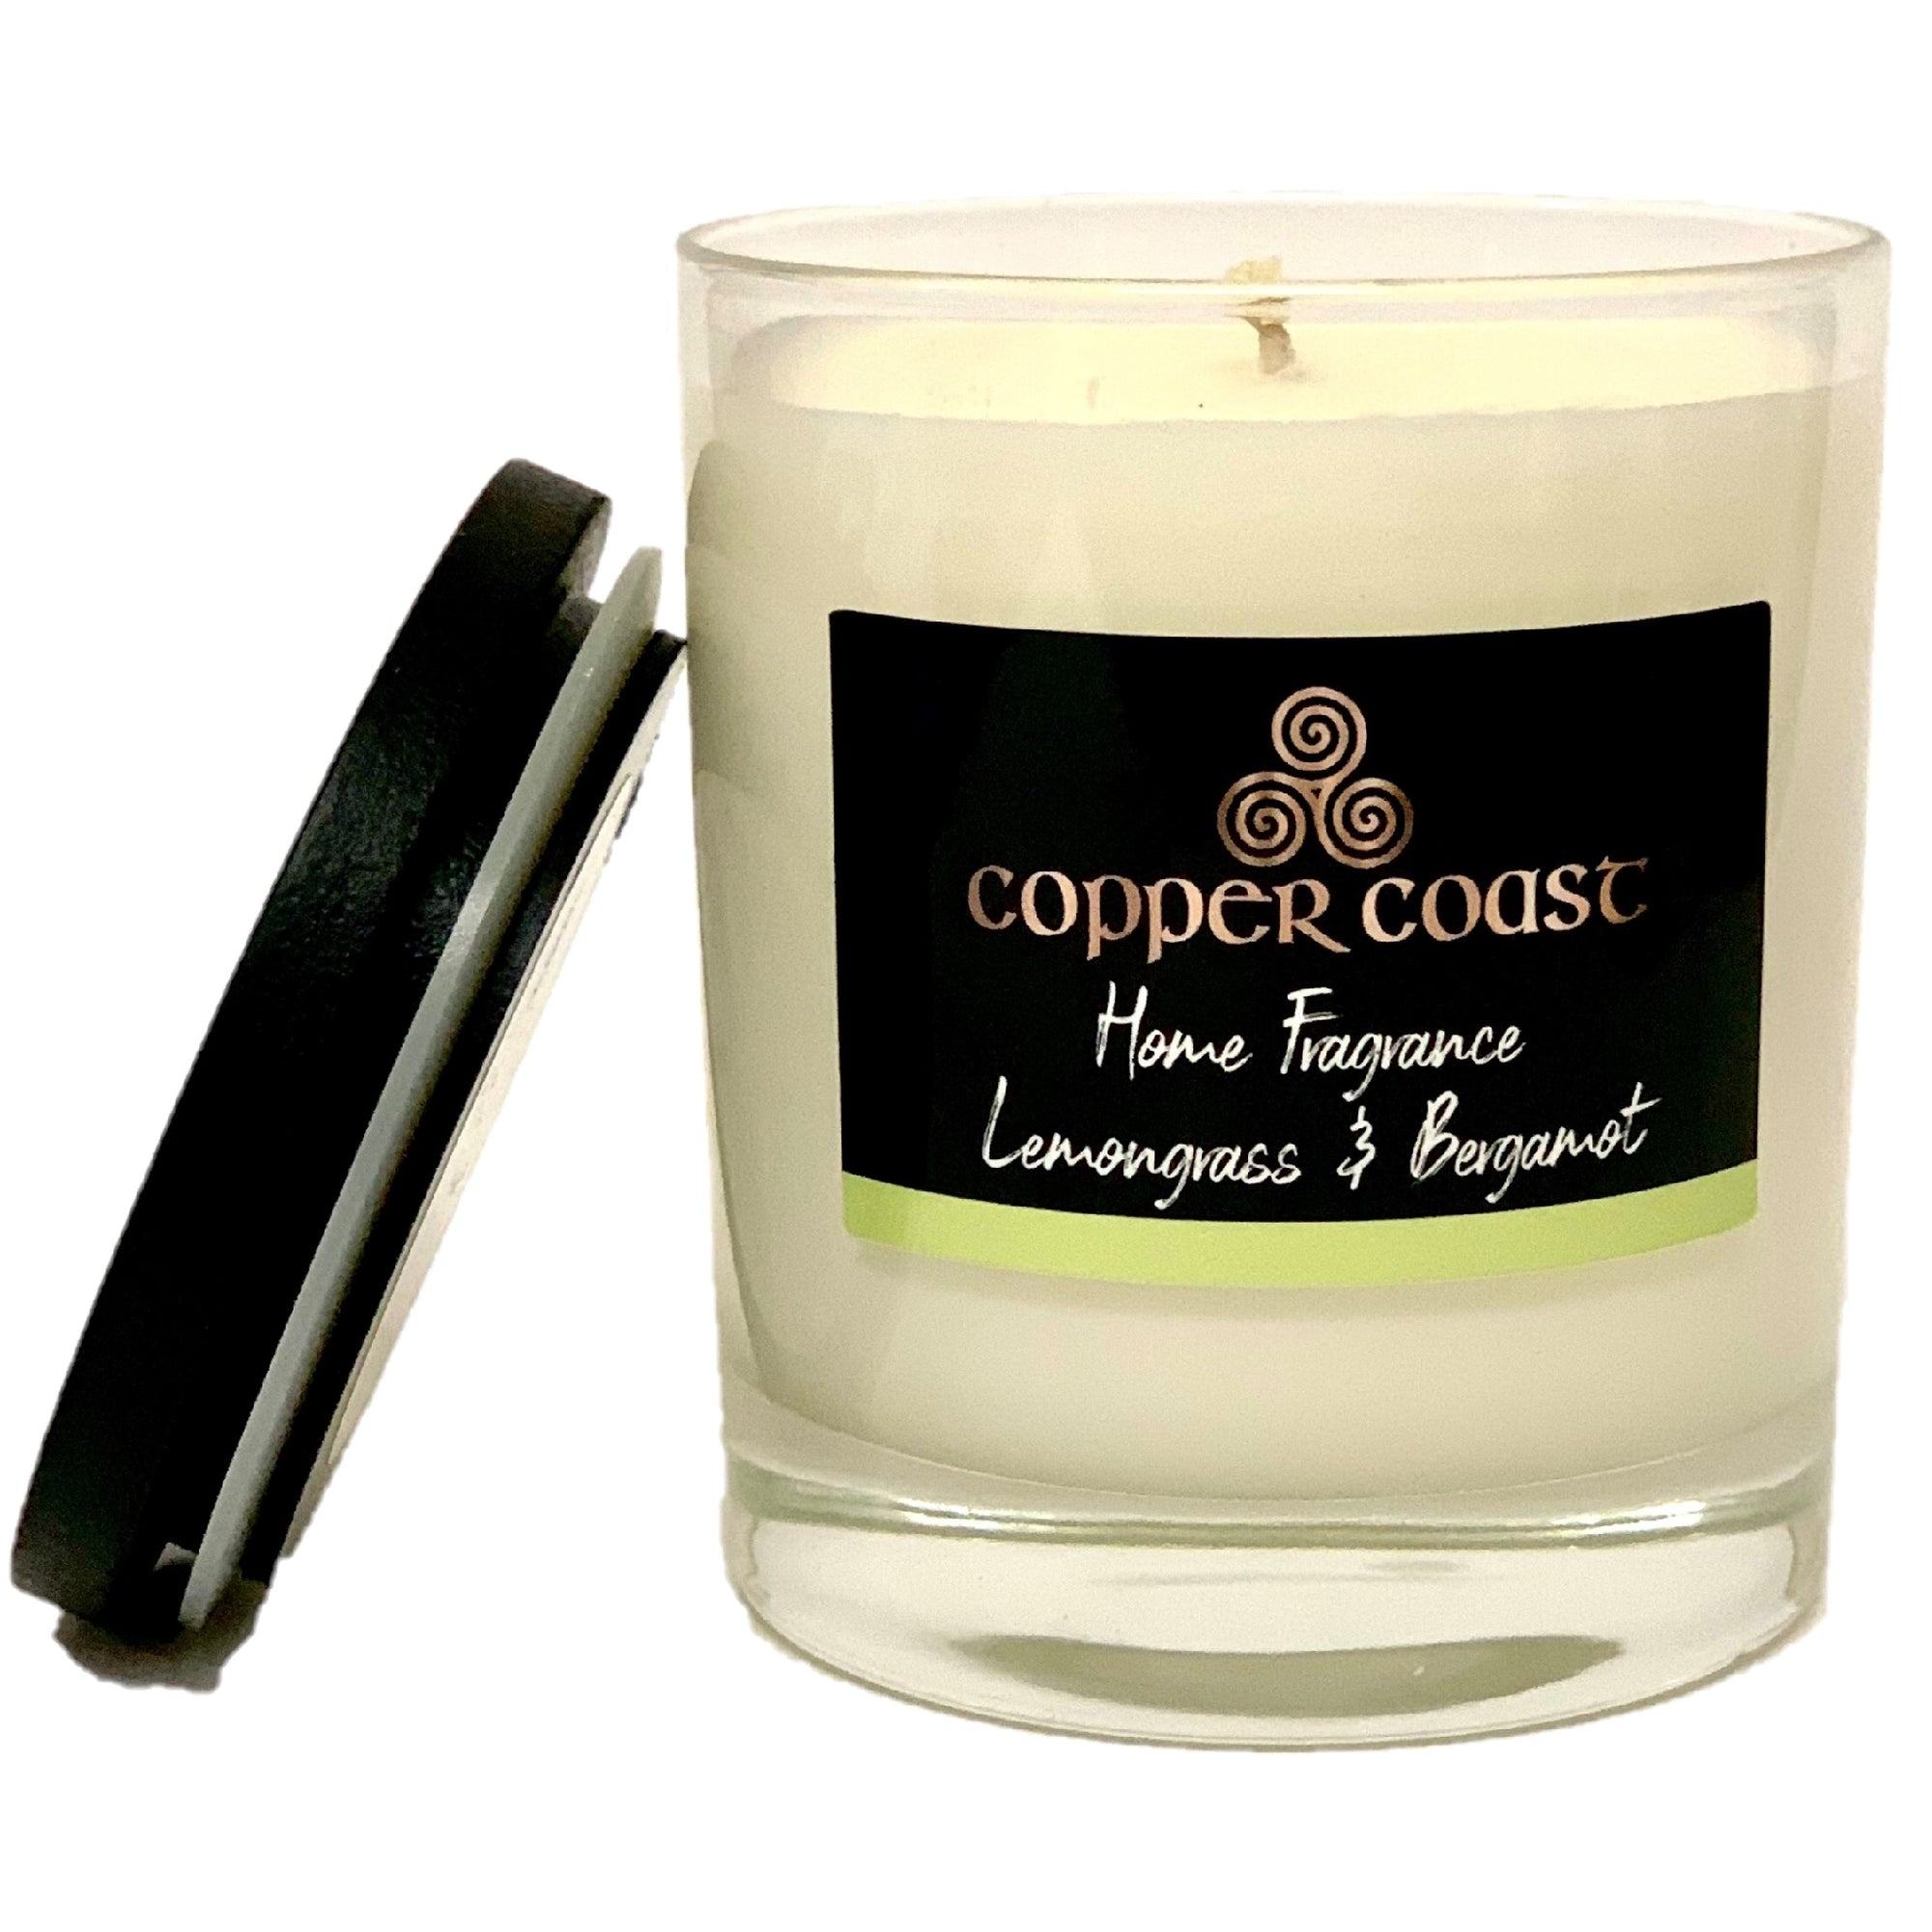 Copper Coast Home Fragrance Lemongrass & Bergamot Soy Wax Candle